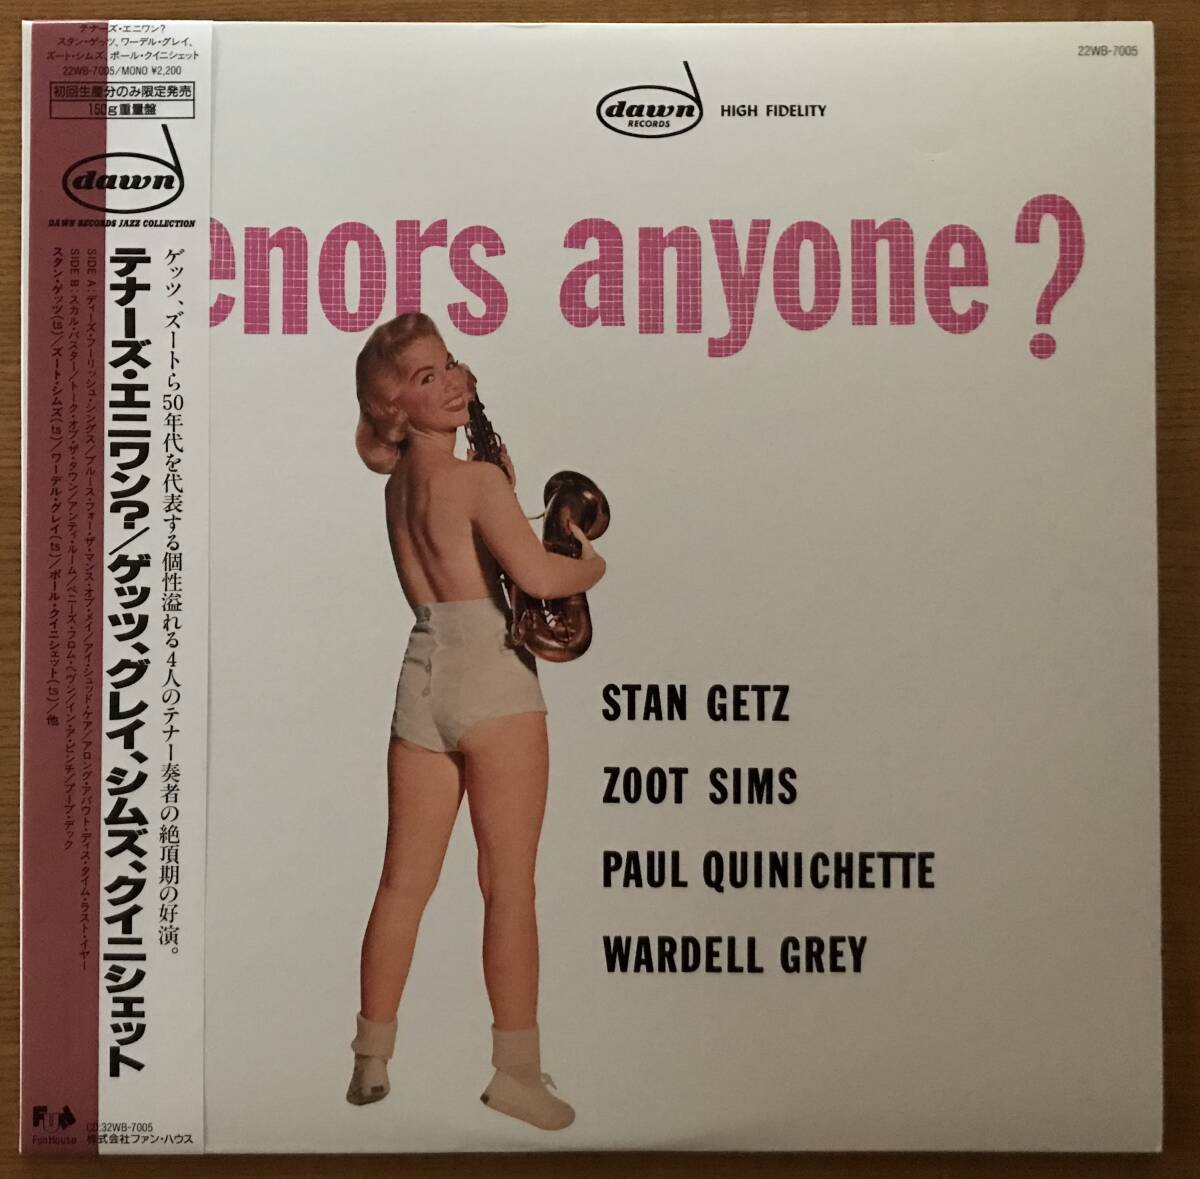 tenors anyone ? / STAN GETZ, ZOOT SIMS, PAUL QUINICHETTE, WARDELL GREY　 美盤_画像1